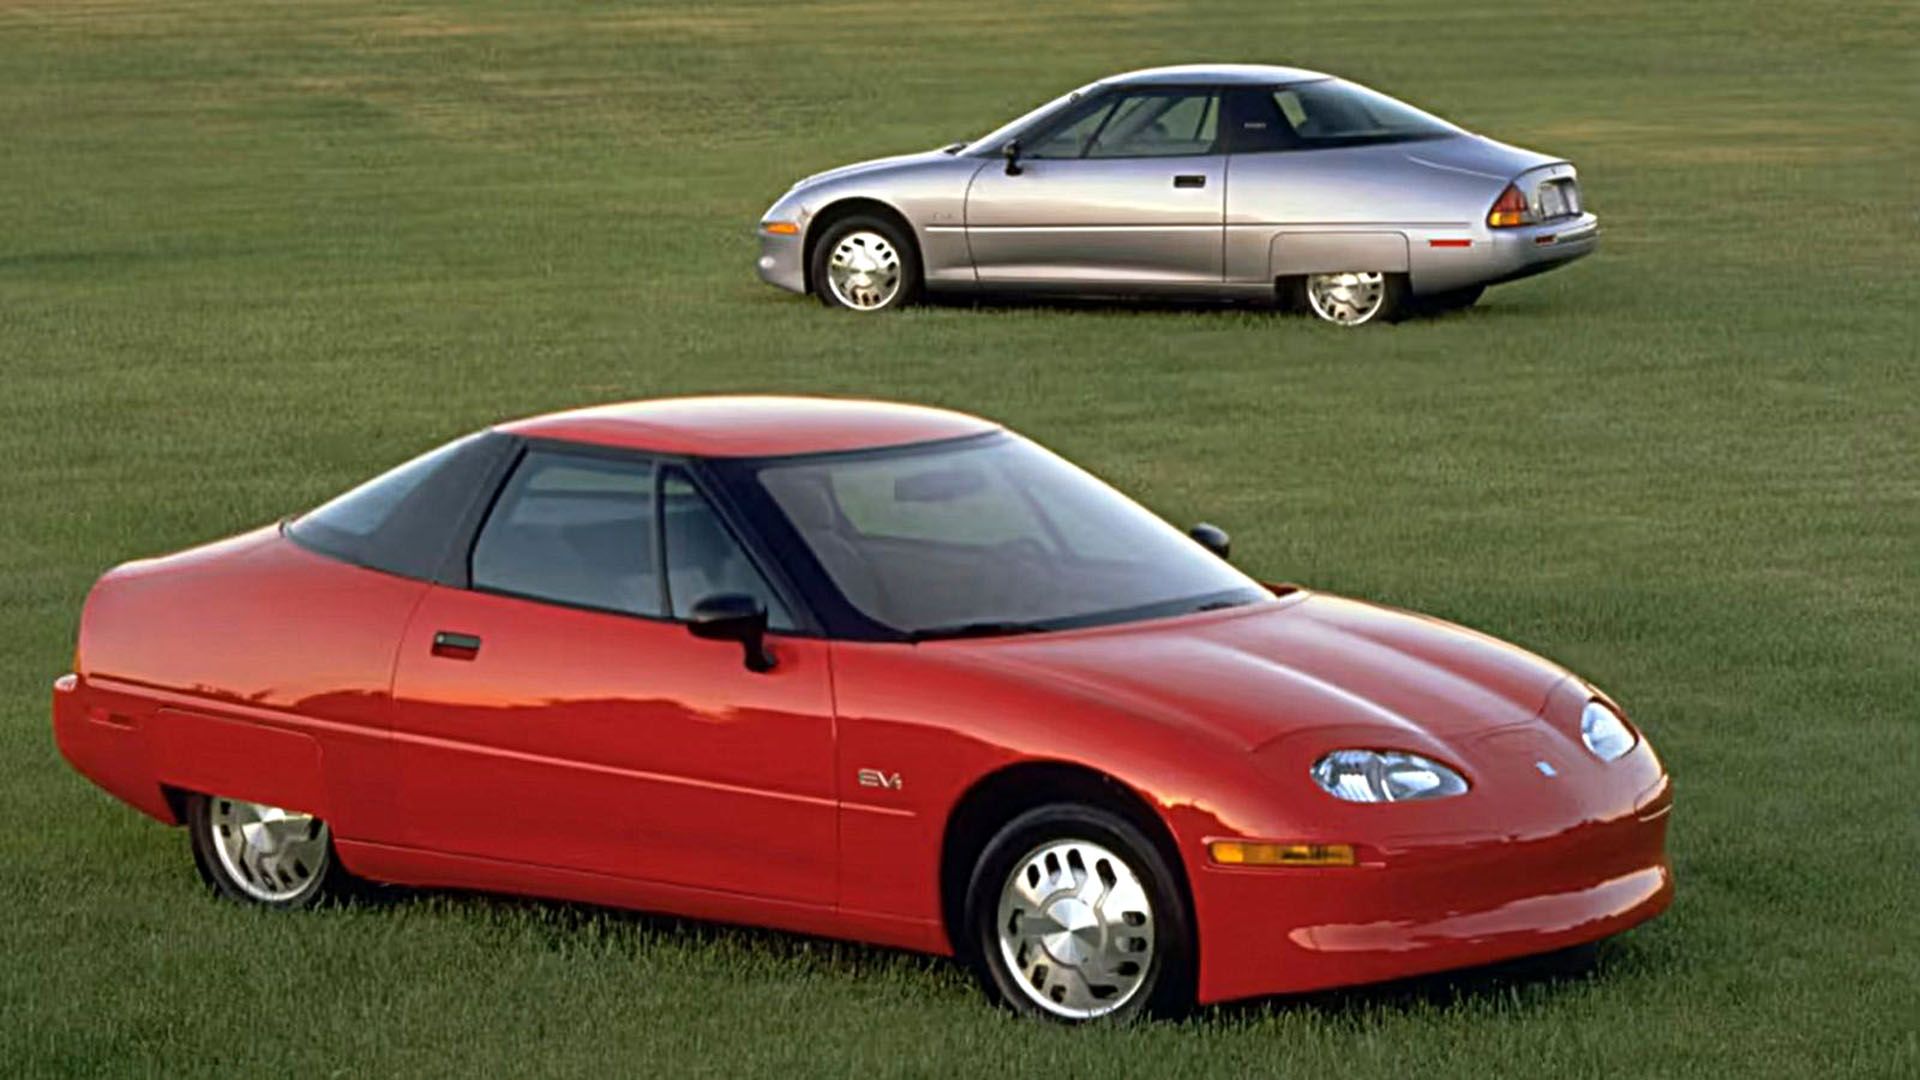 GM EV1 silver & red, profile view